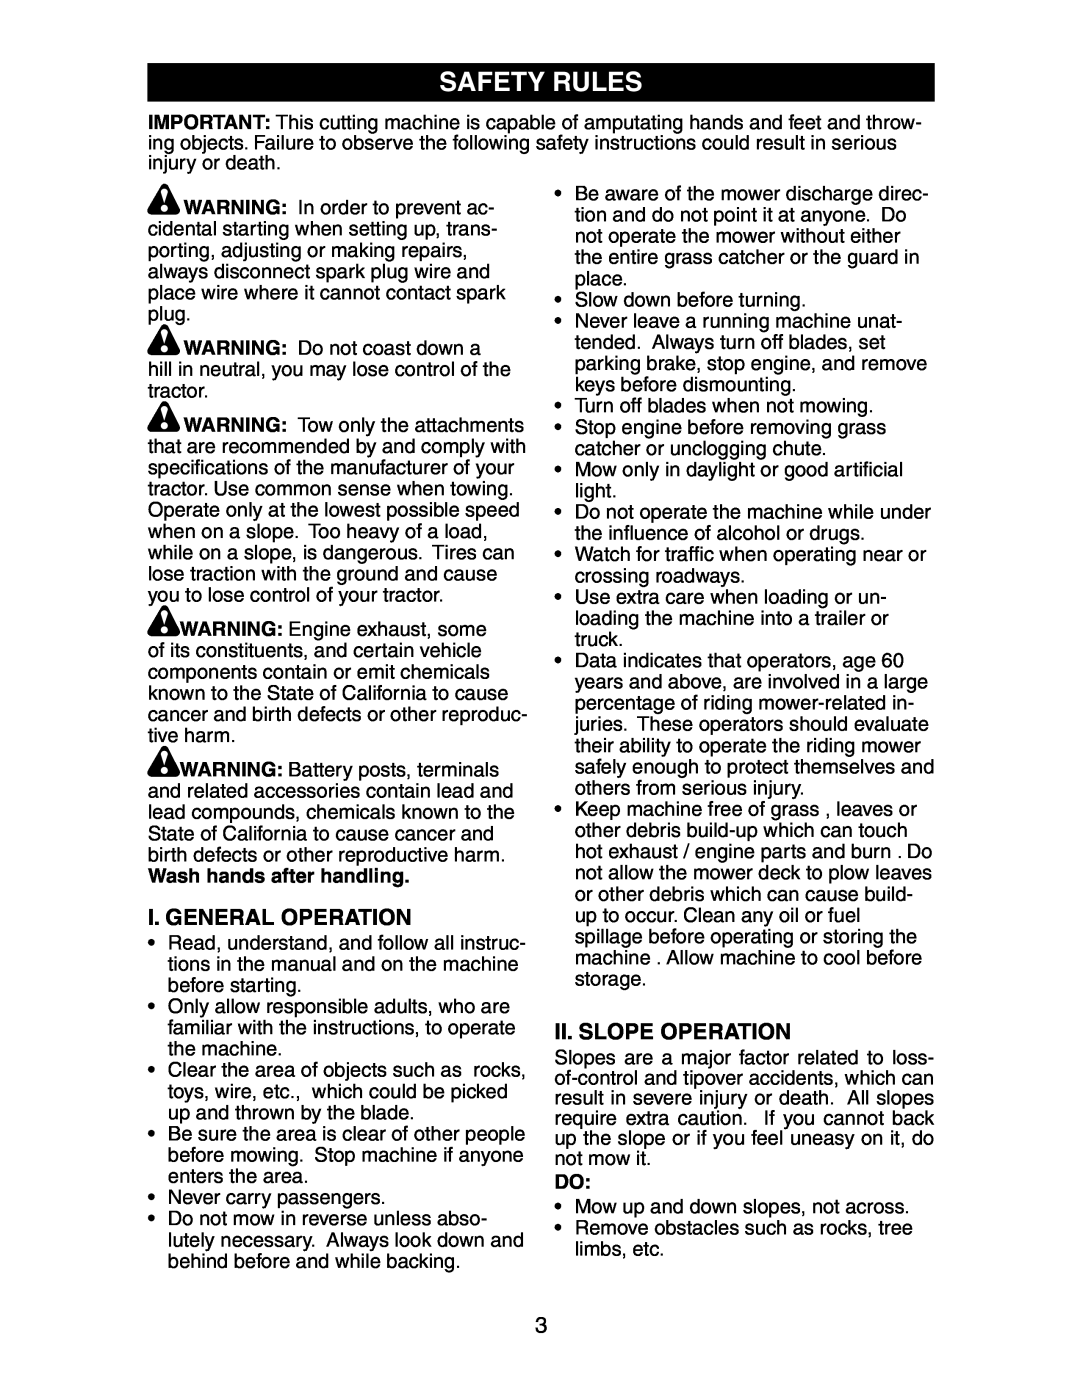 Poulan 191603 manual Safety Rules, I. General Operation, Ii. Slope Operation, Wash hands after handling 